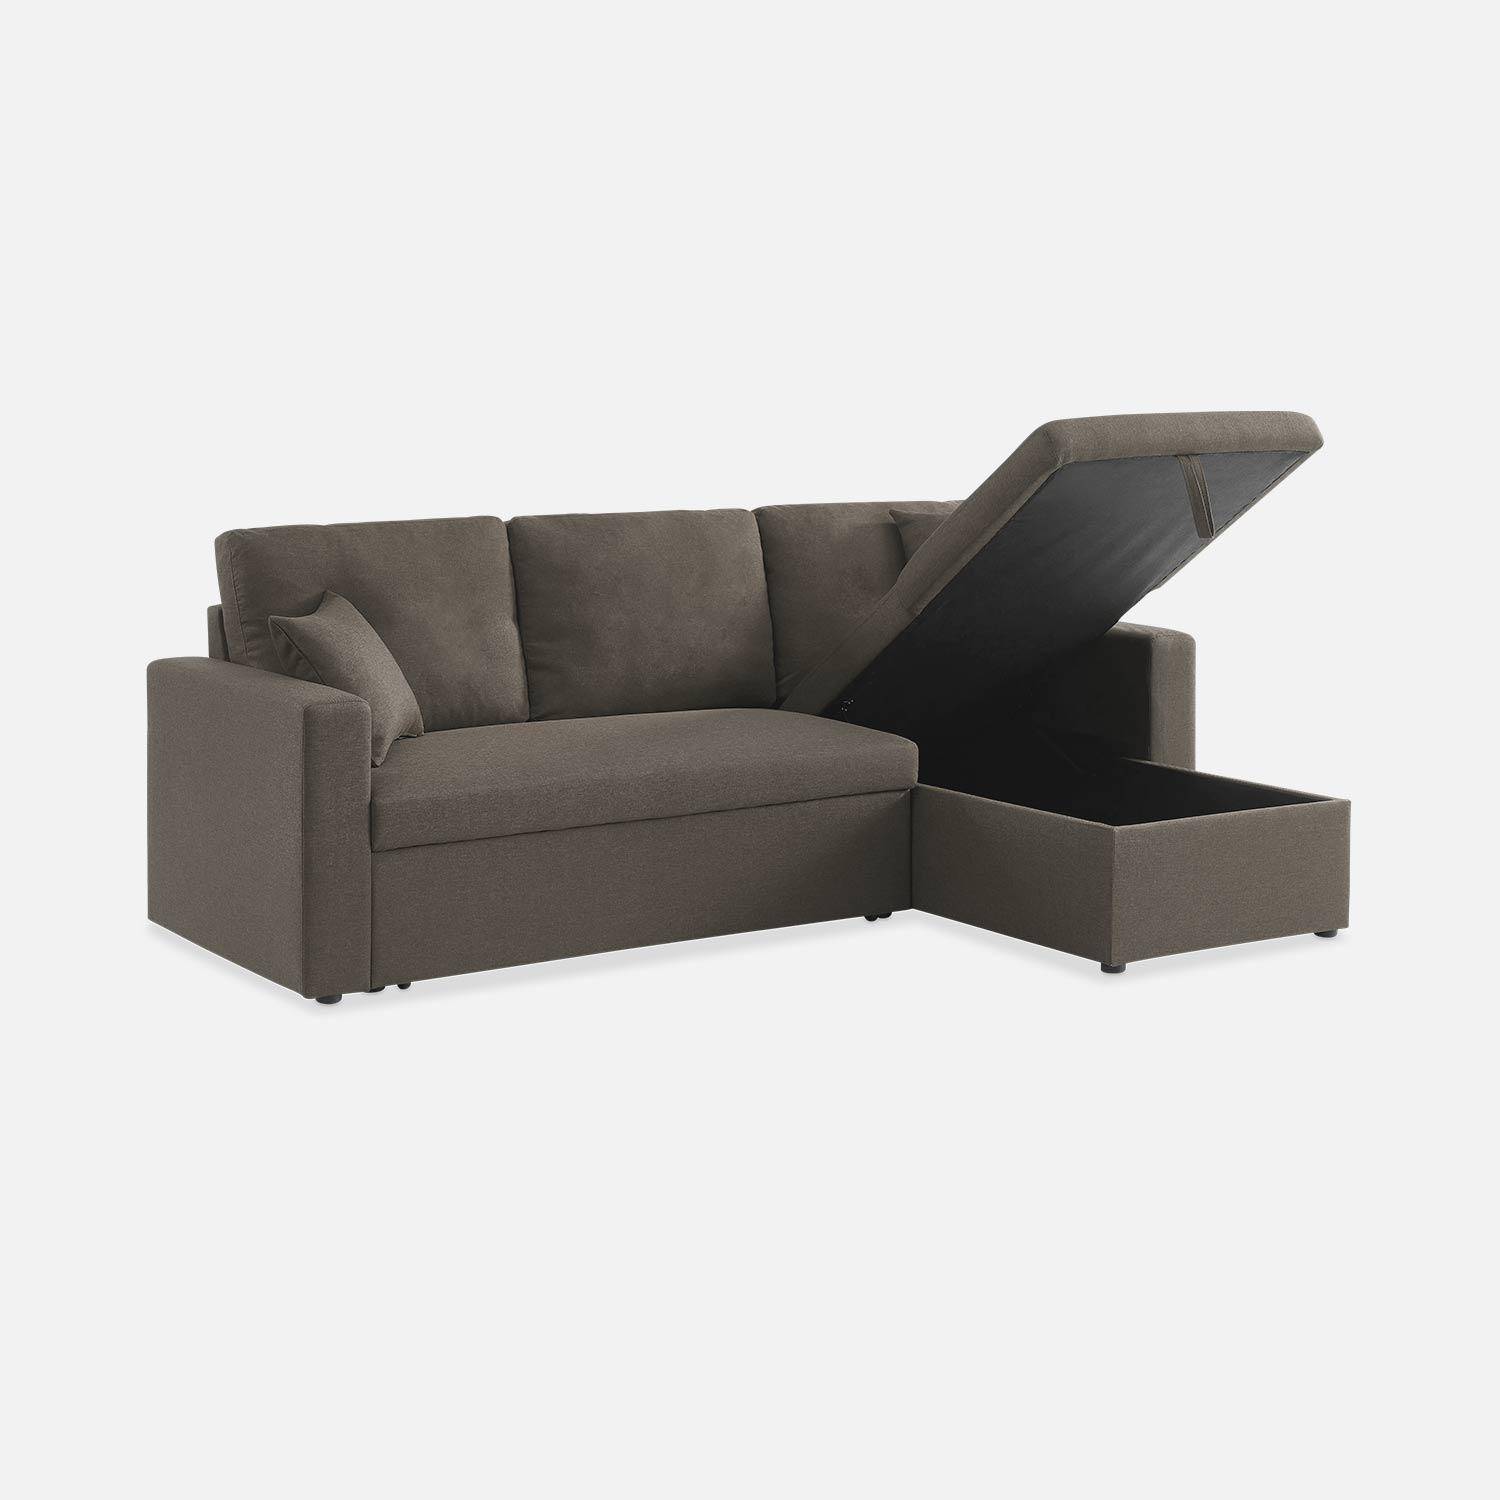 Bruine stoffen bedbank met chaise longue en opbergruimte - IDA - 3-zits, omkeerbare hoeksalon, opbergruimte, zetelbed Photo7